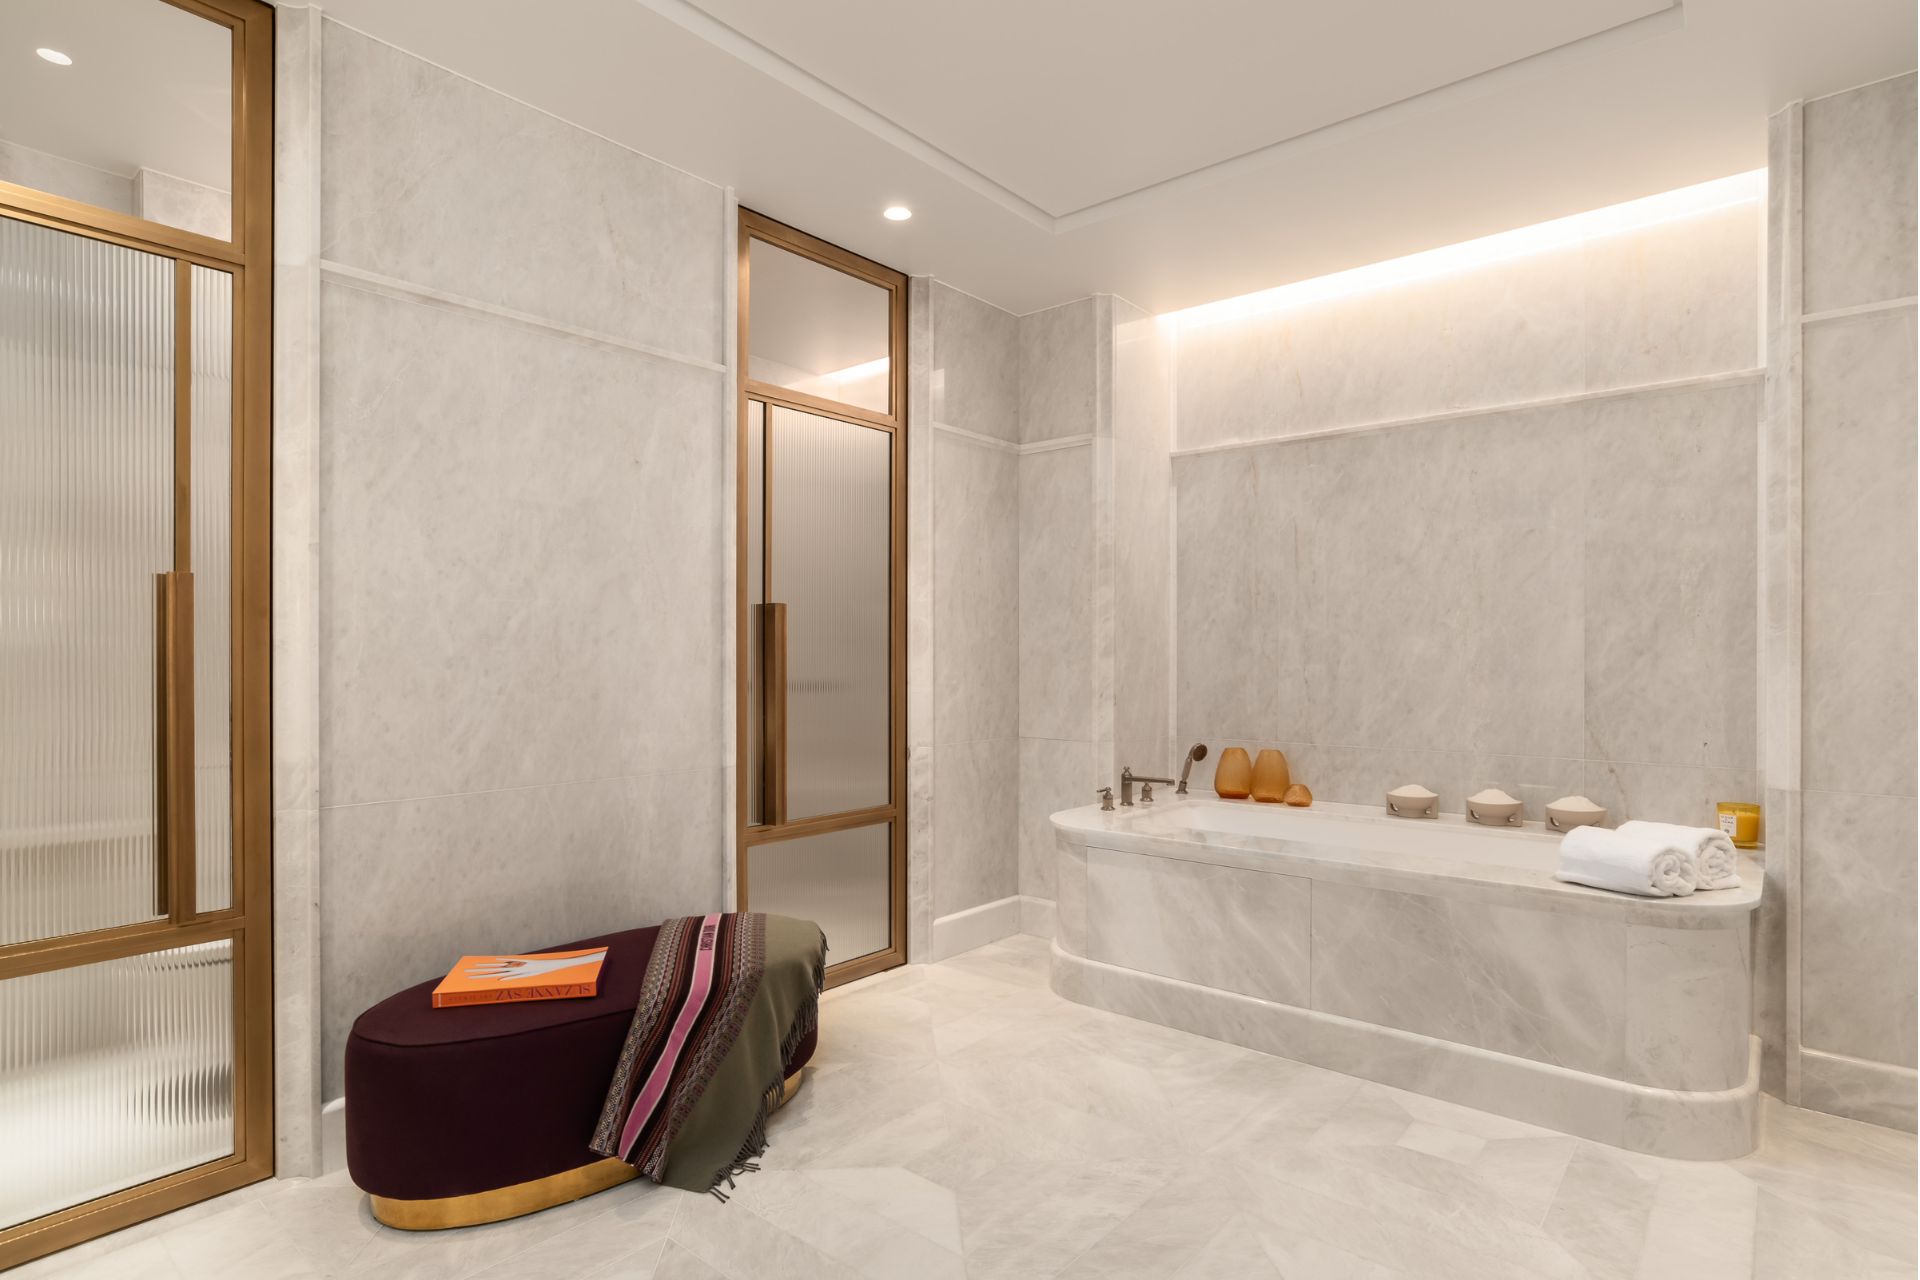 Marble bathroom with large bathtub and a velvet stool.